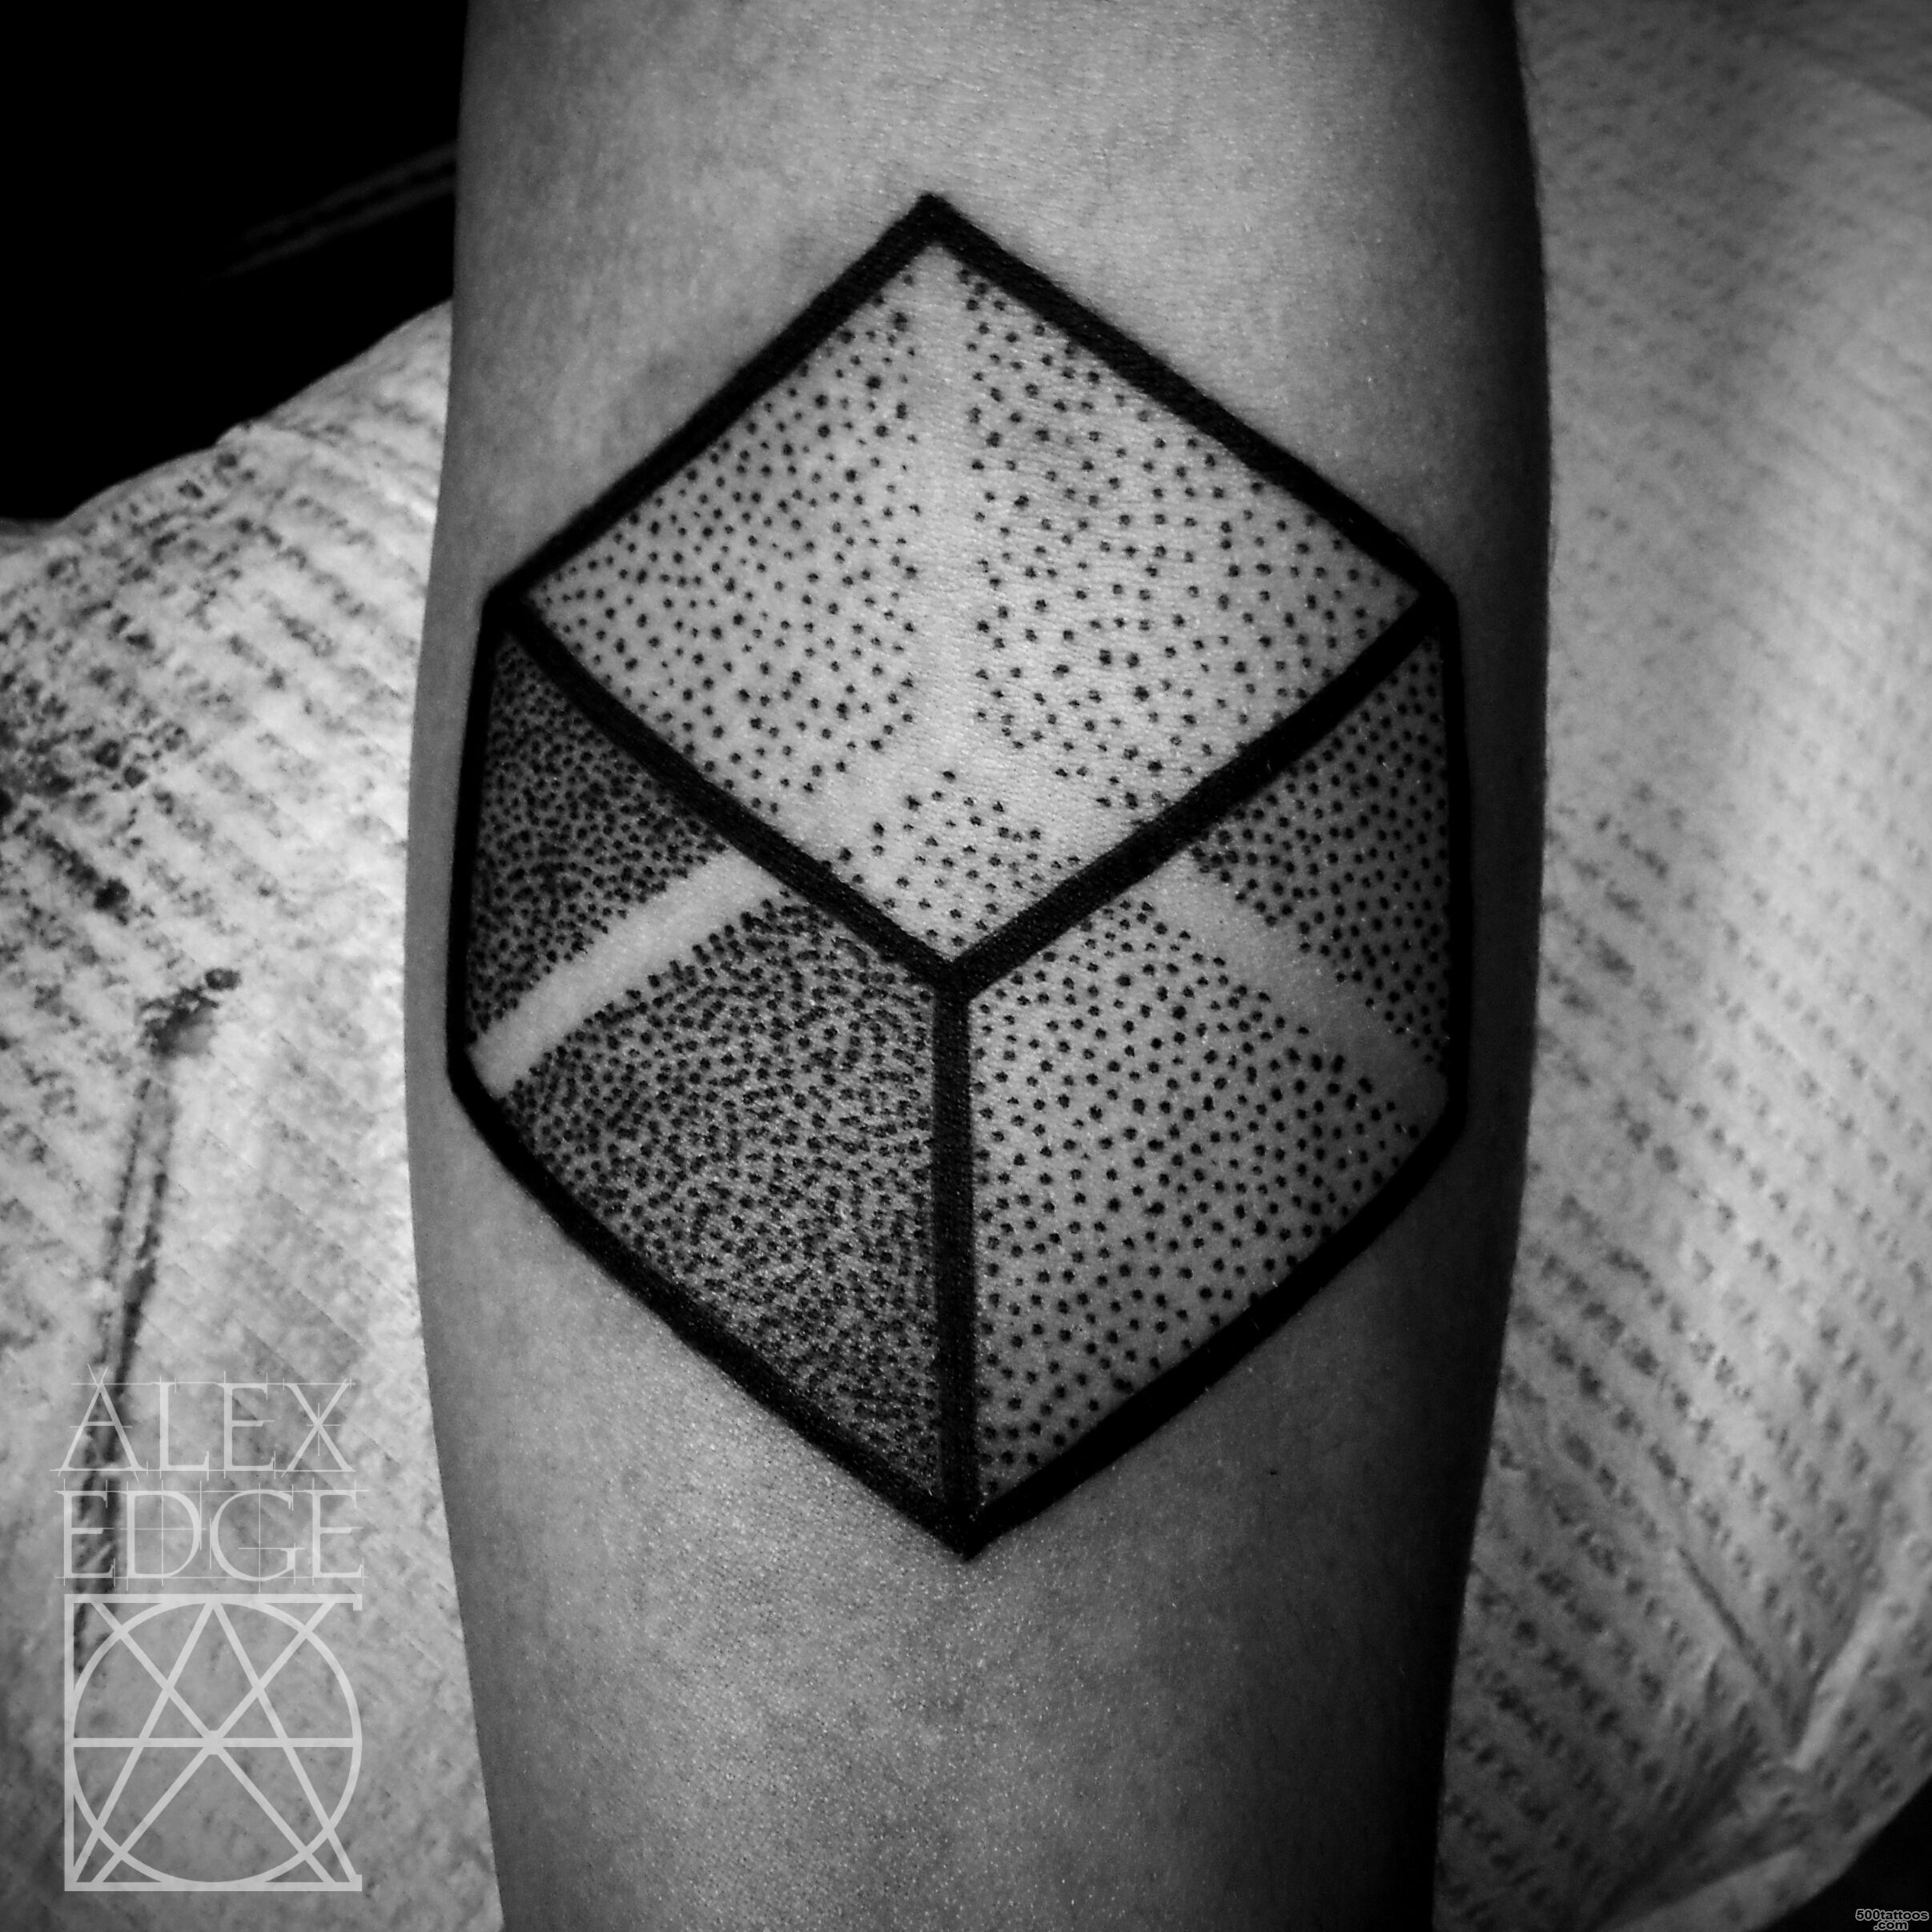 Hexahedron dot work tattoo by Alex edge in San Diego.  Tattoo.com_36